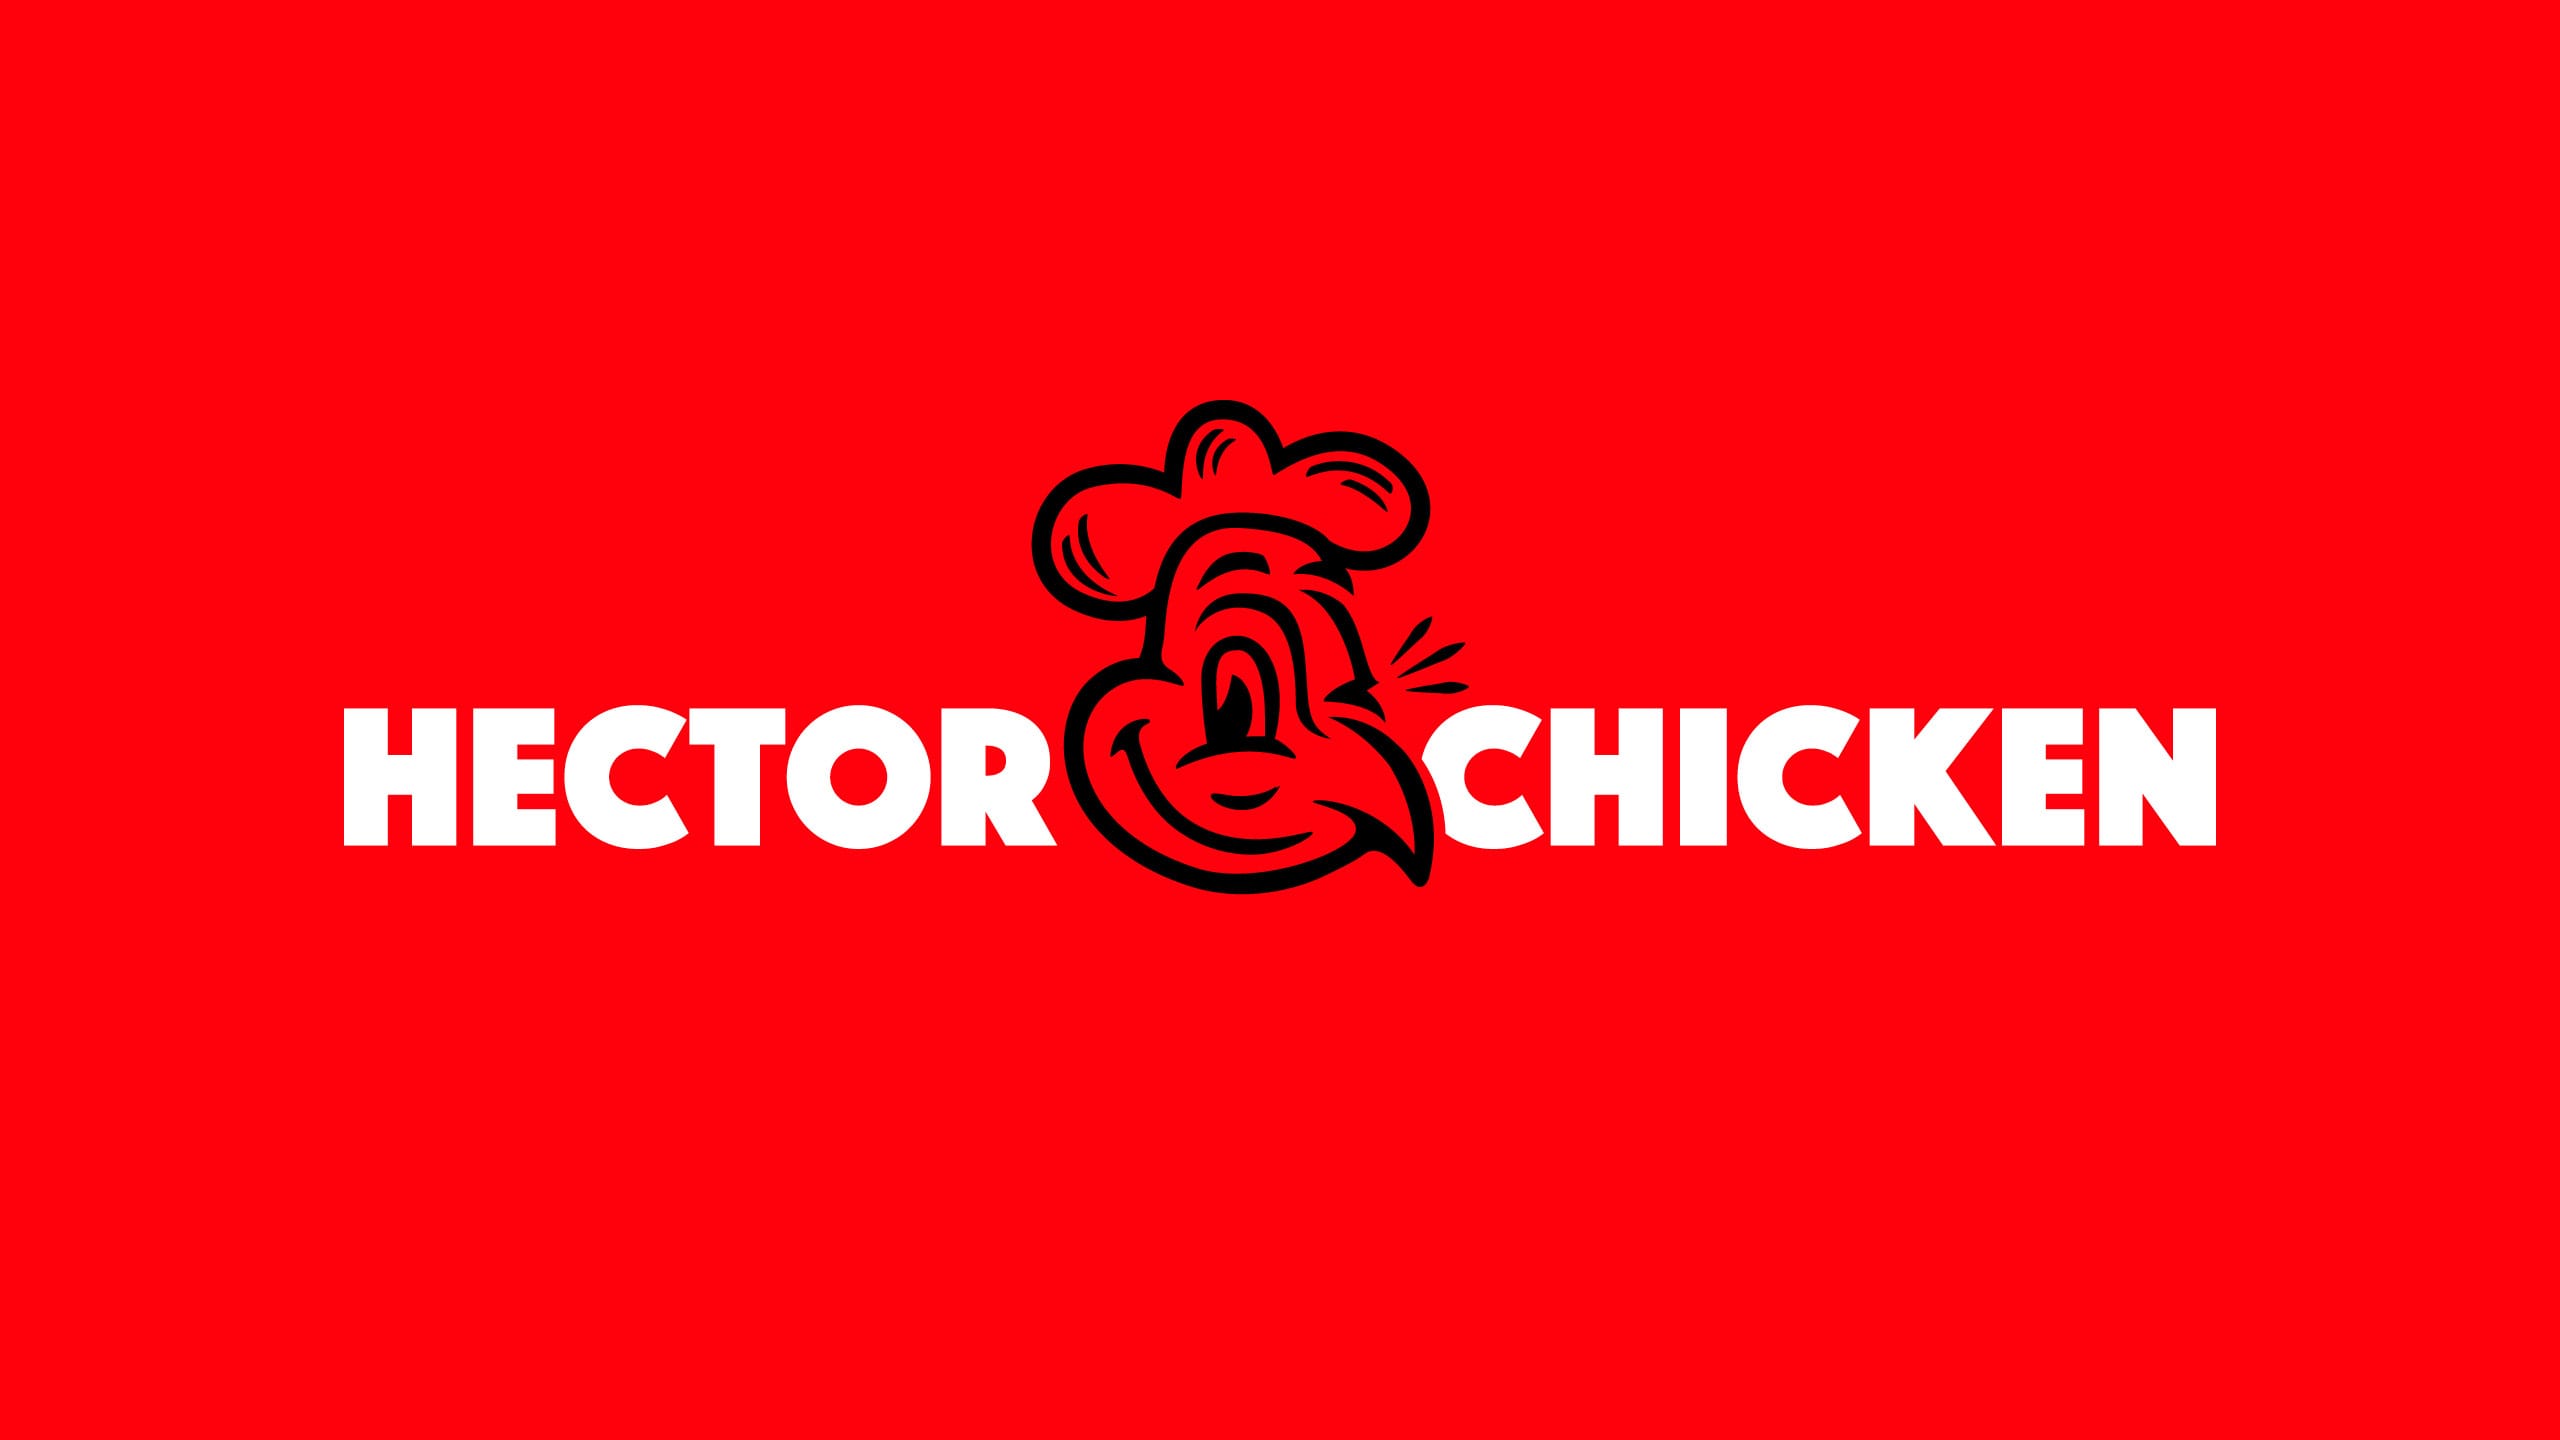 Hector-chicken-branding-logotype-2